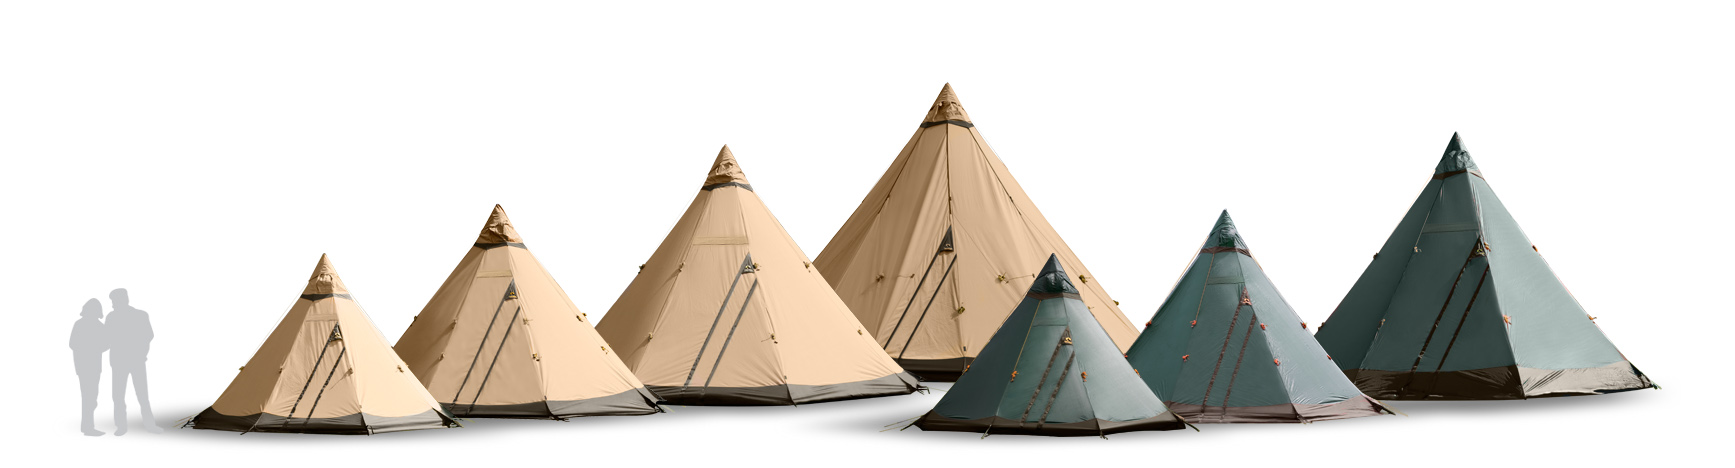 2018 PRO Tent Range Complete wp